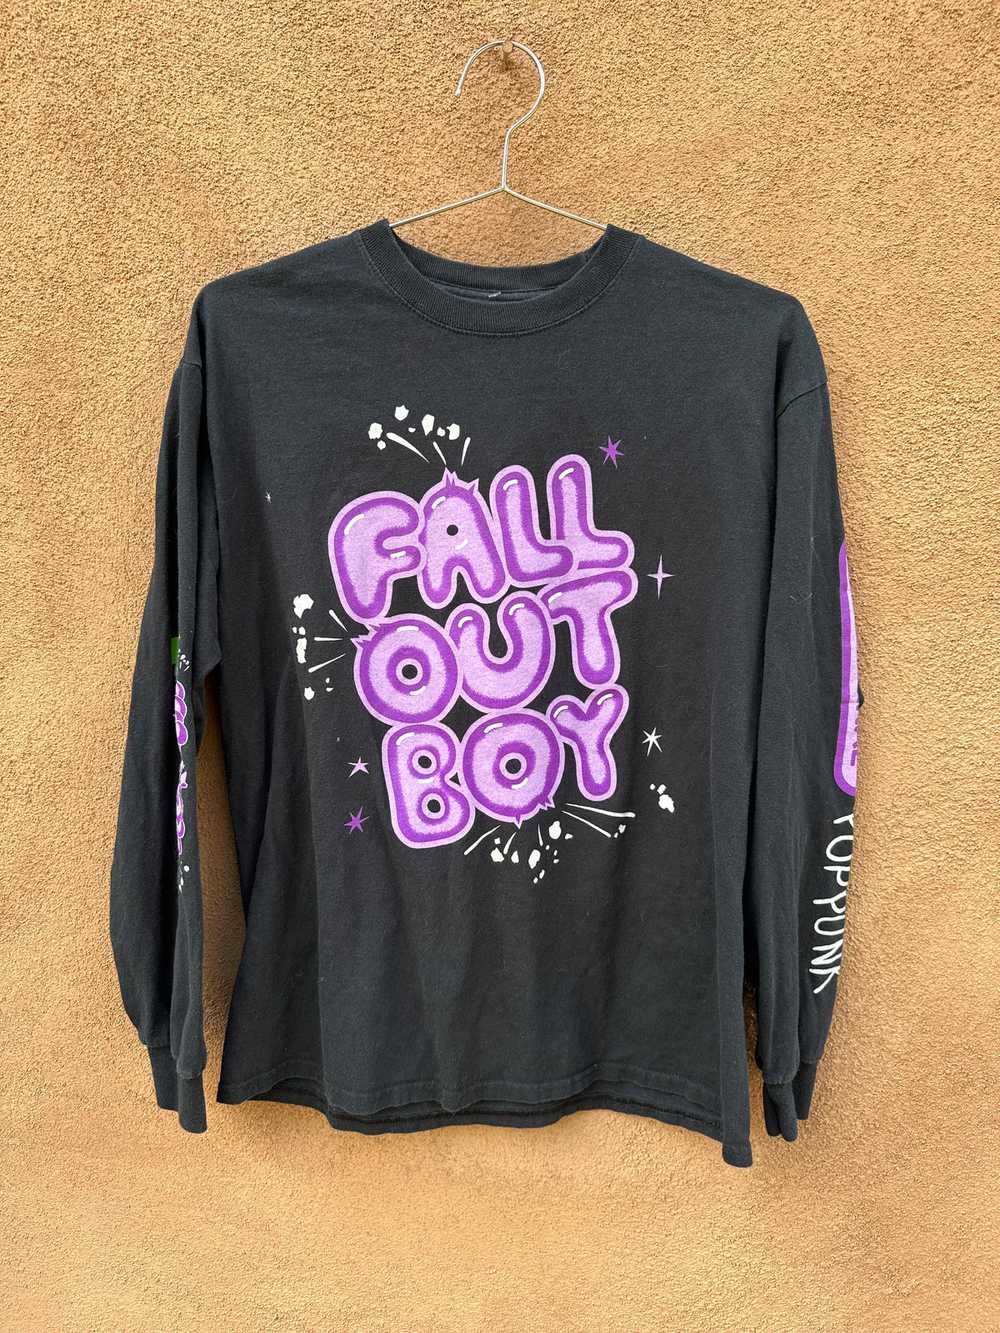 Fall Out Boy Long Sleeve T-shirt - image 1